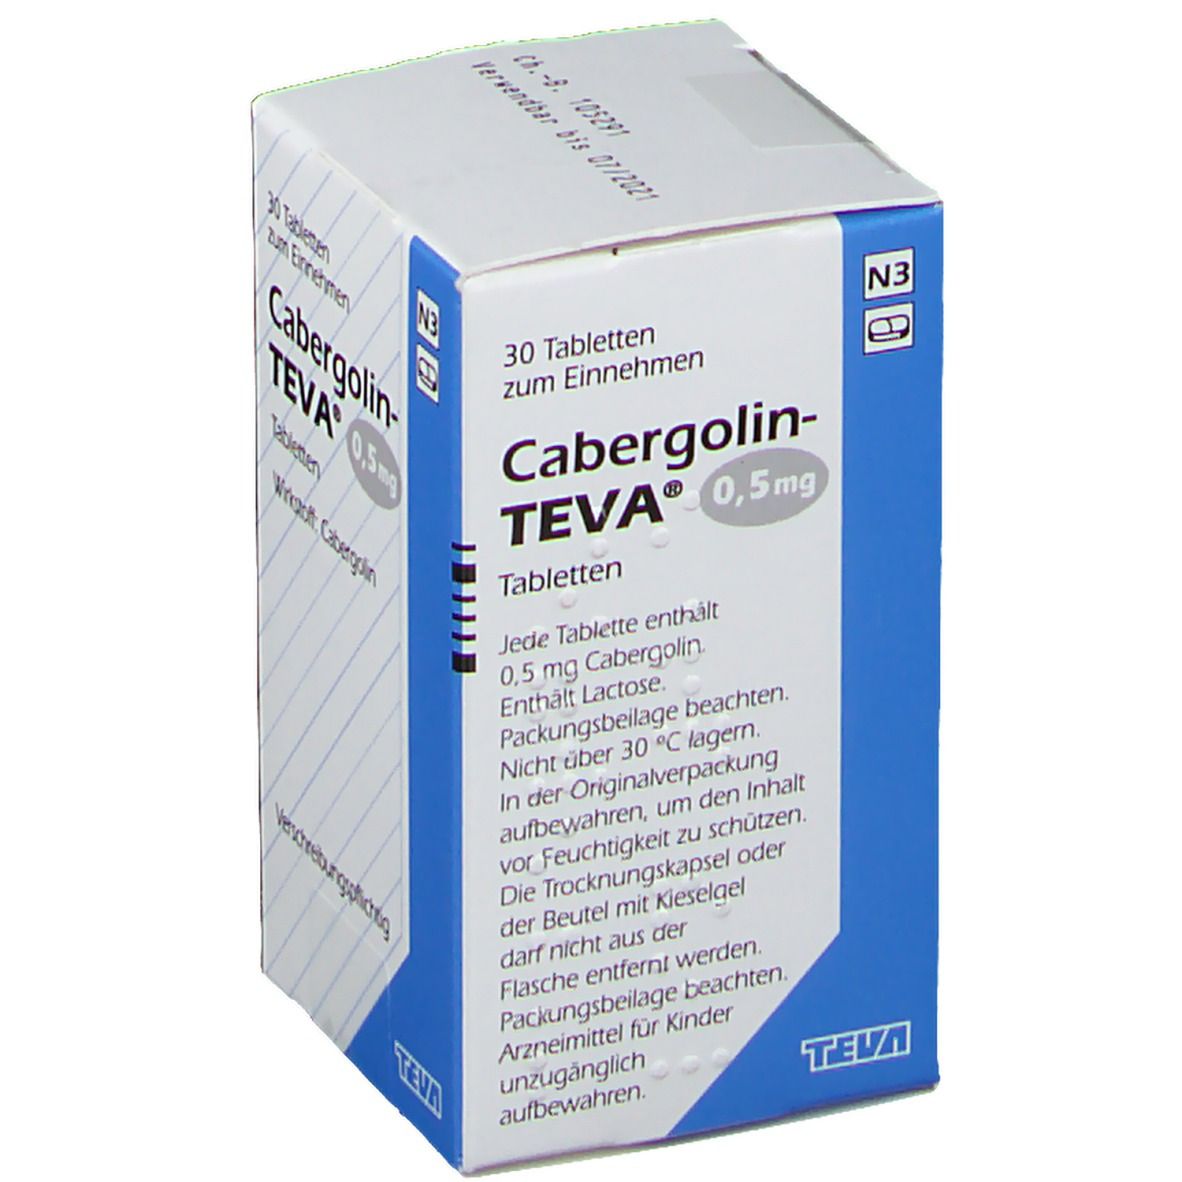 Cabergolin-TEVA® 0,5 mg